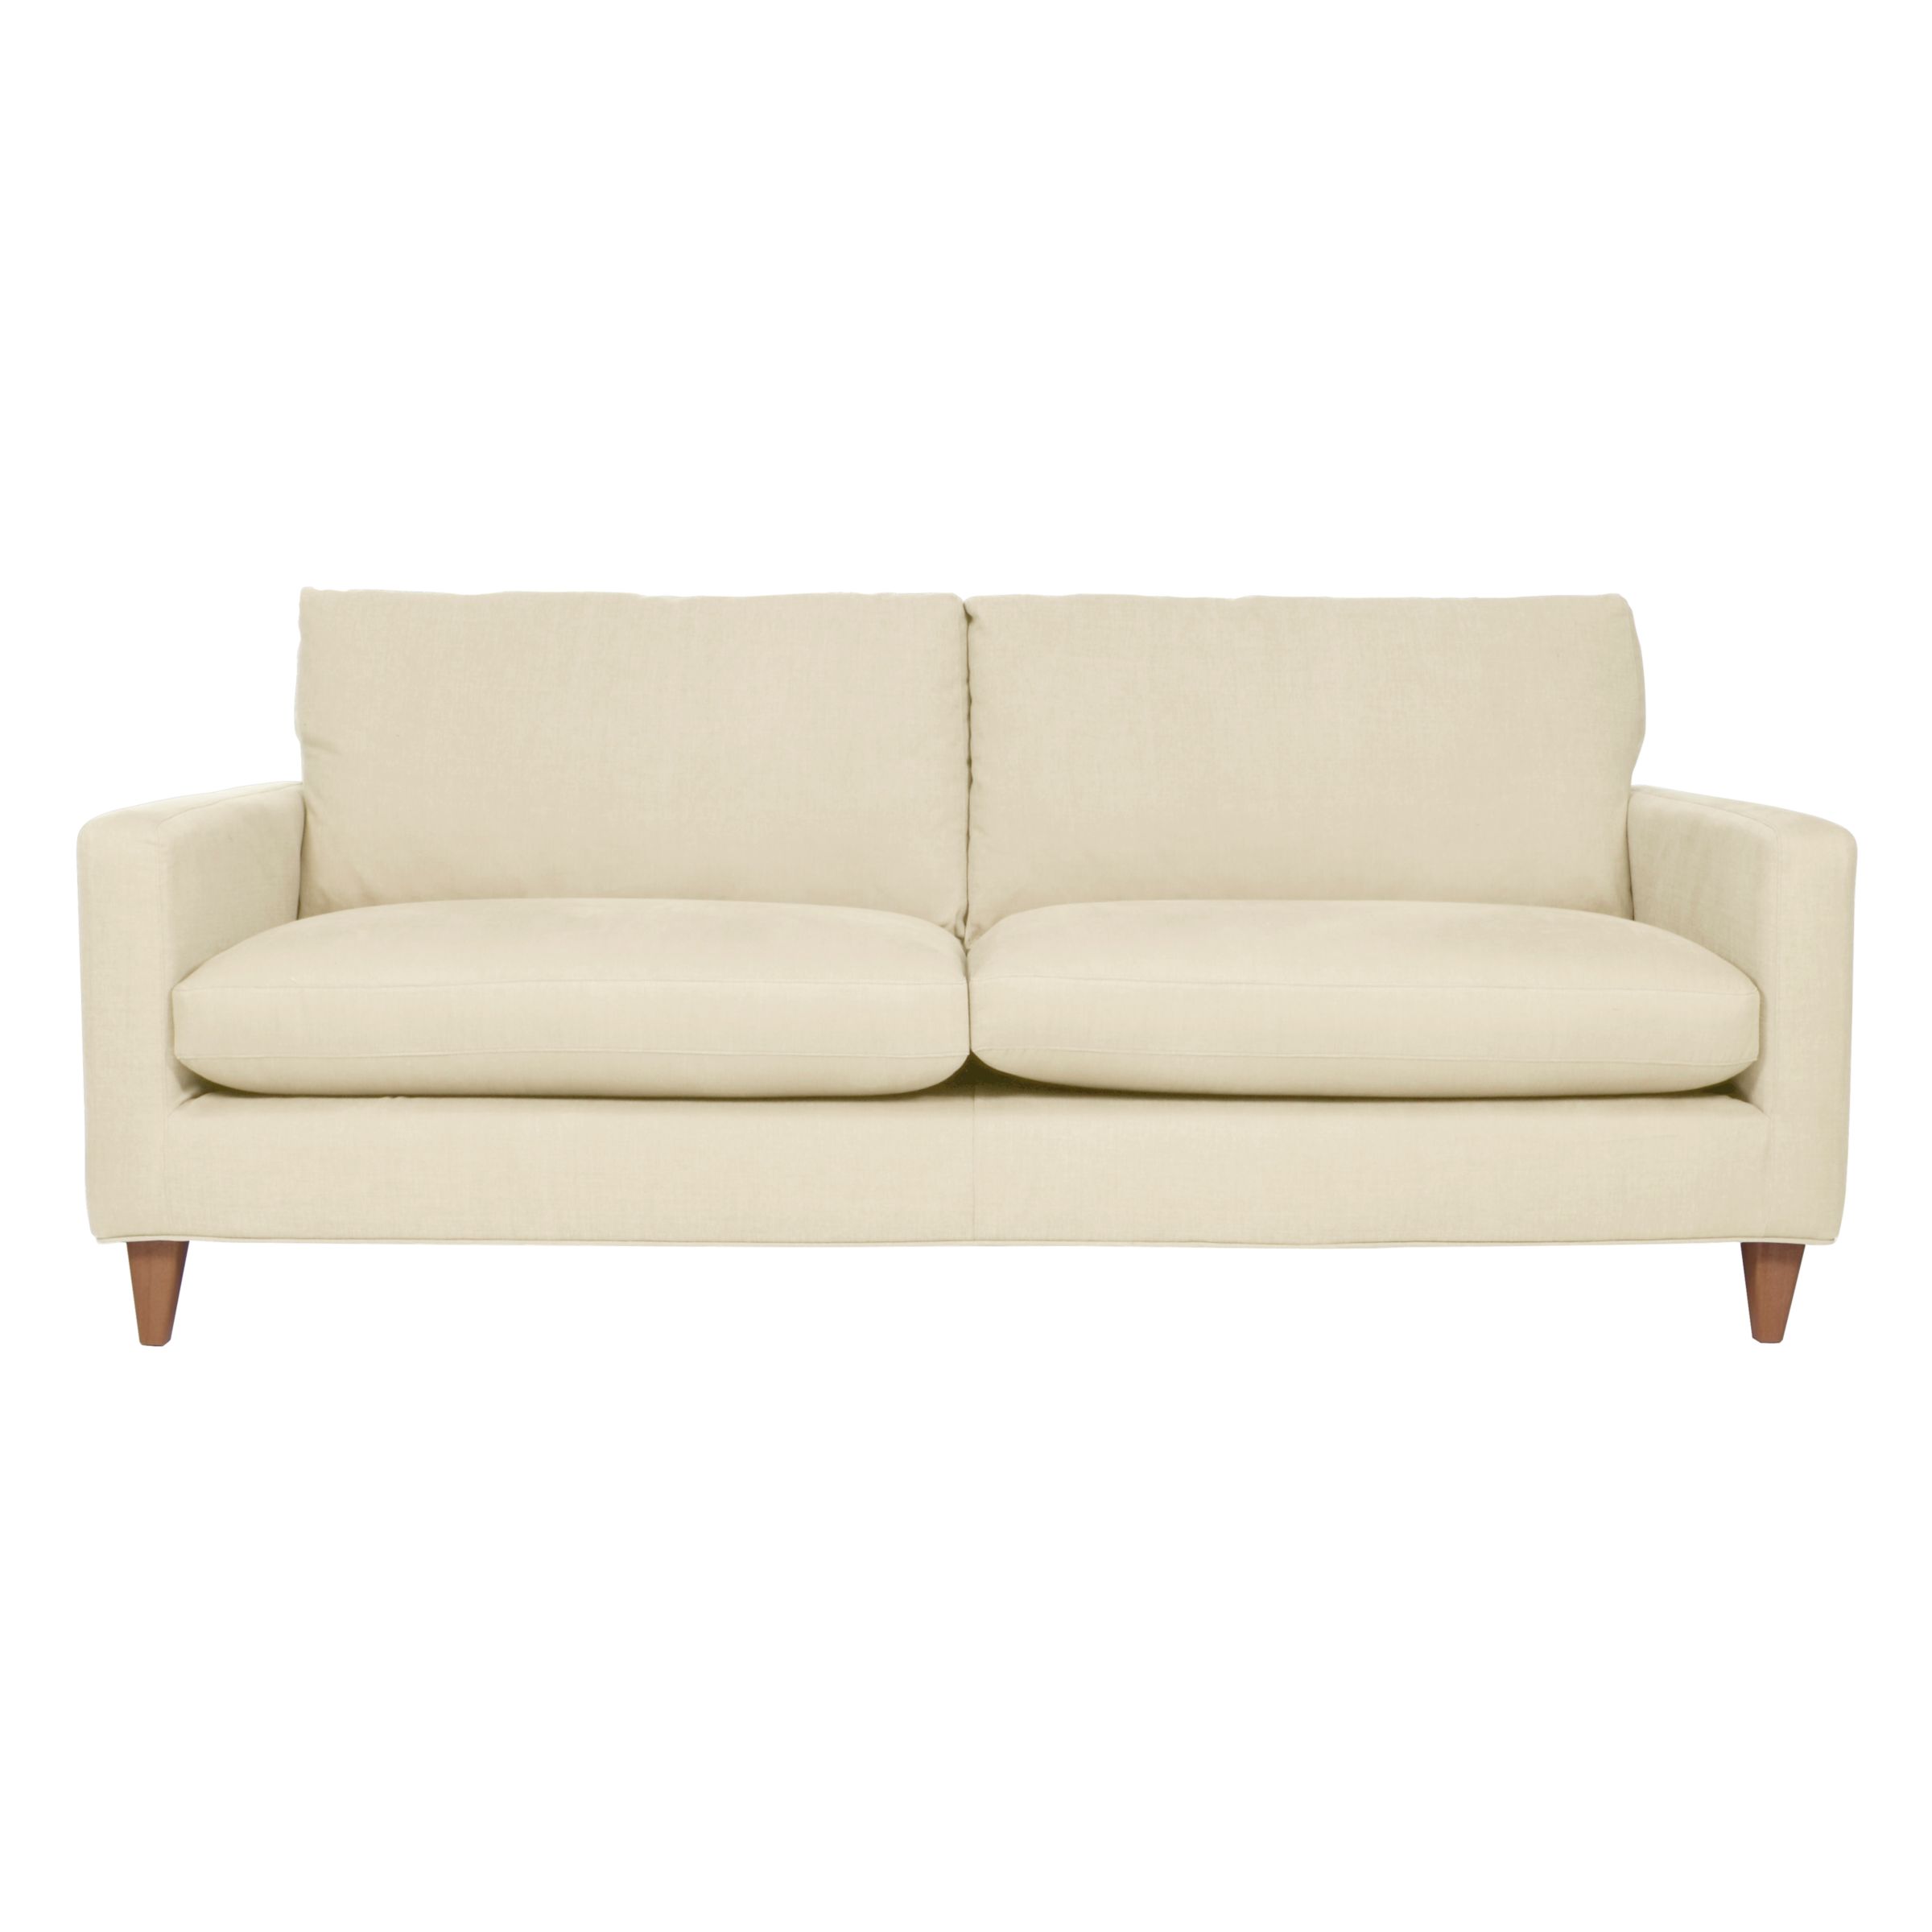 John Lewis Bailey Grand Sofa, Oban Natural, width 214cm